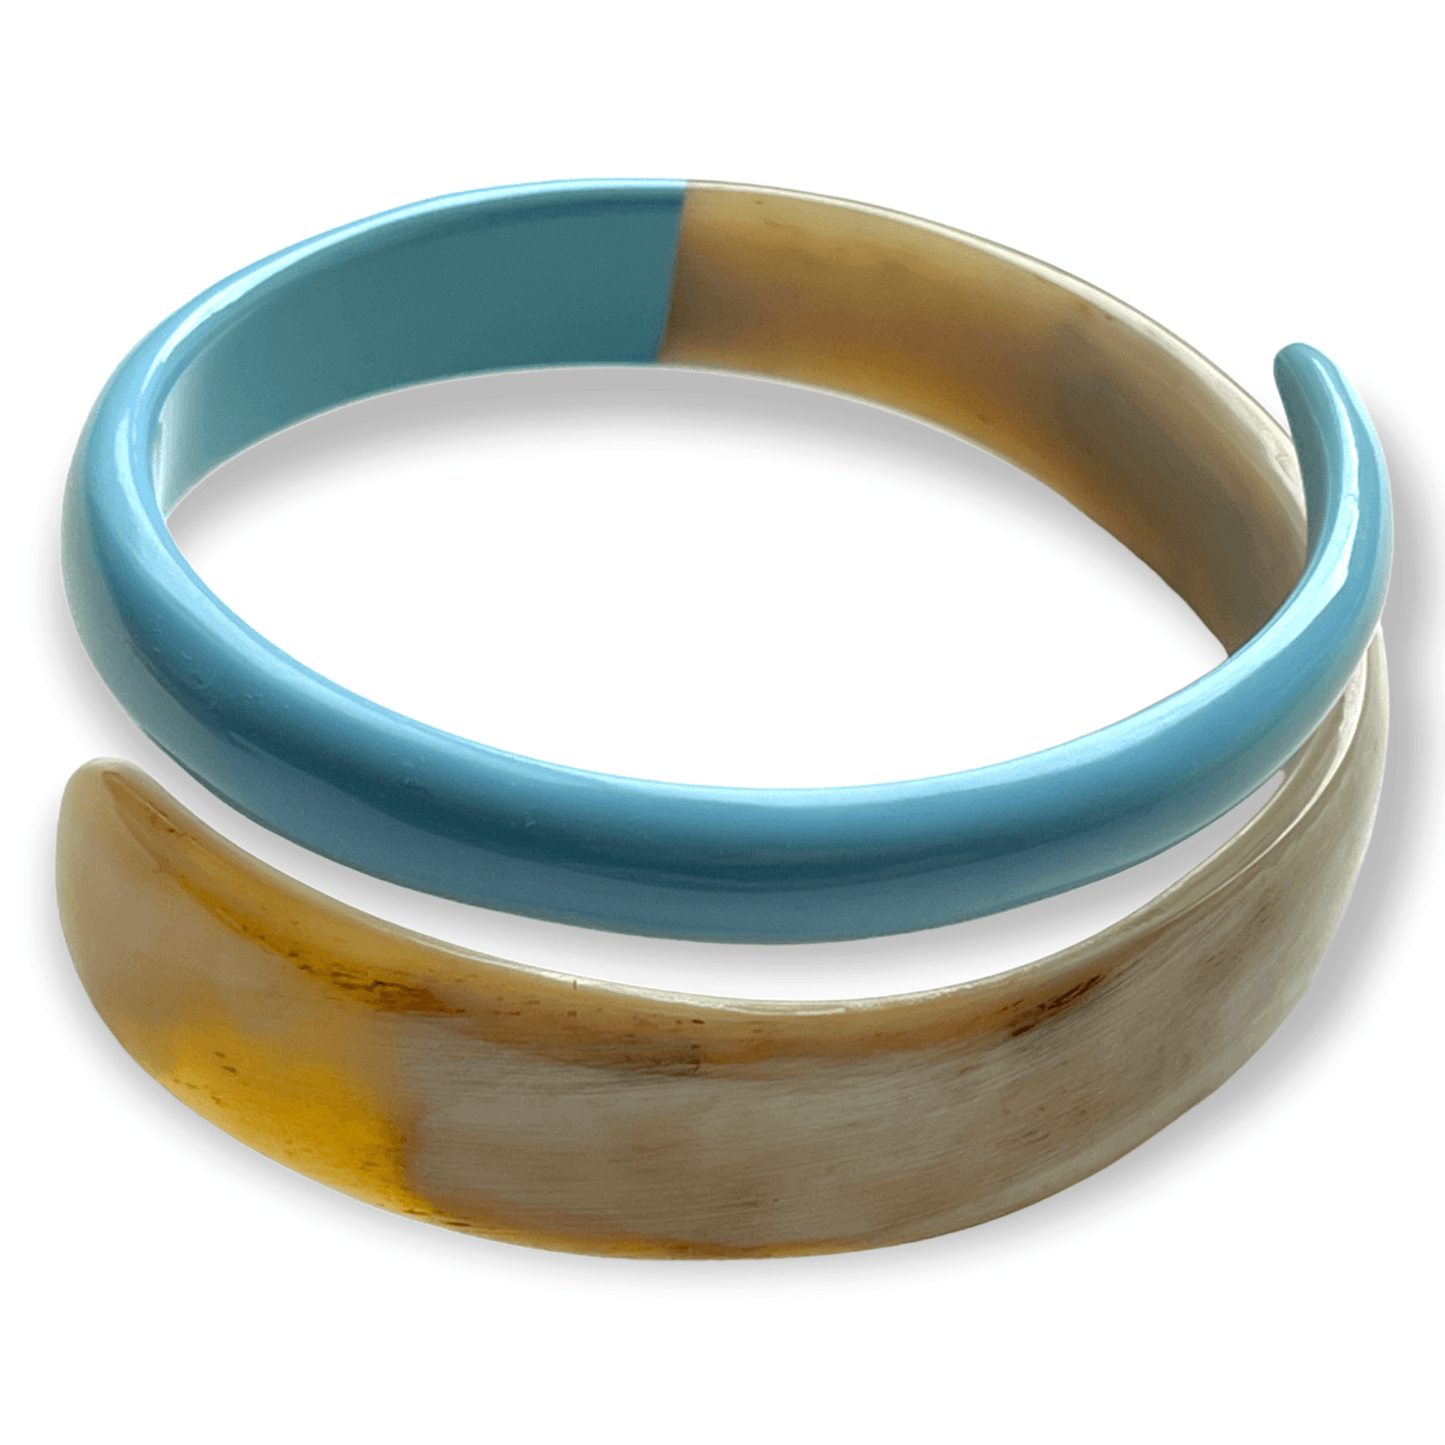 Serpentine bracelets with a splash of colorSundara Joon